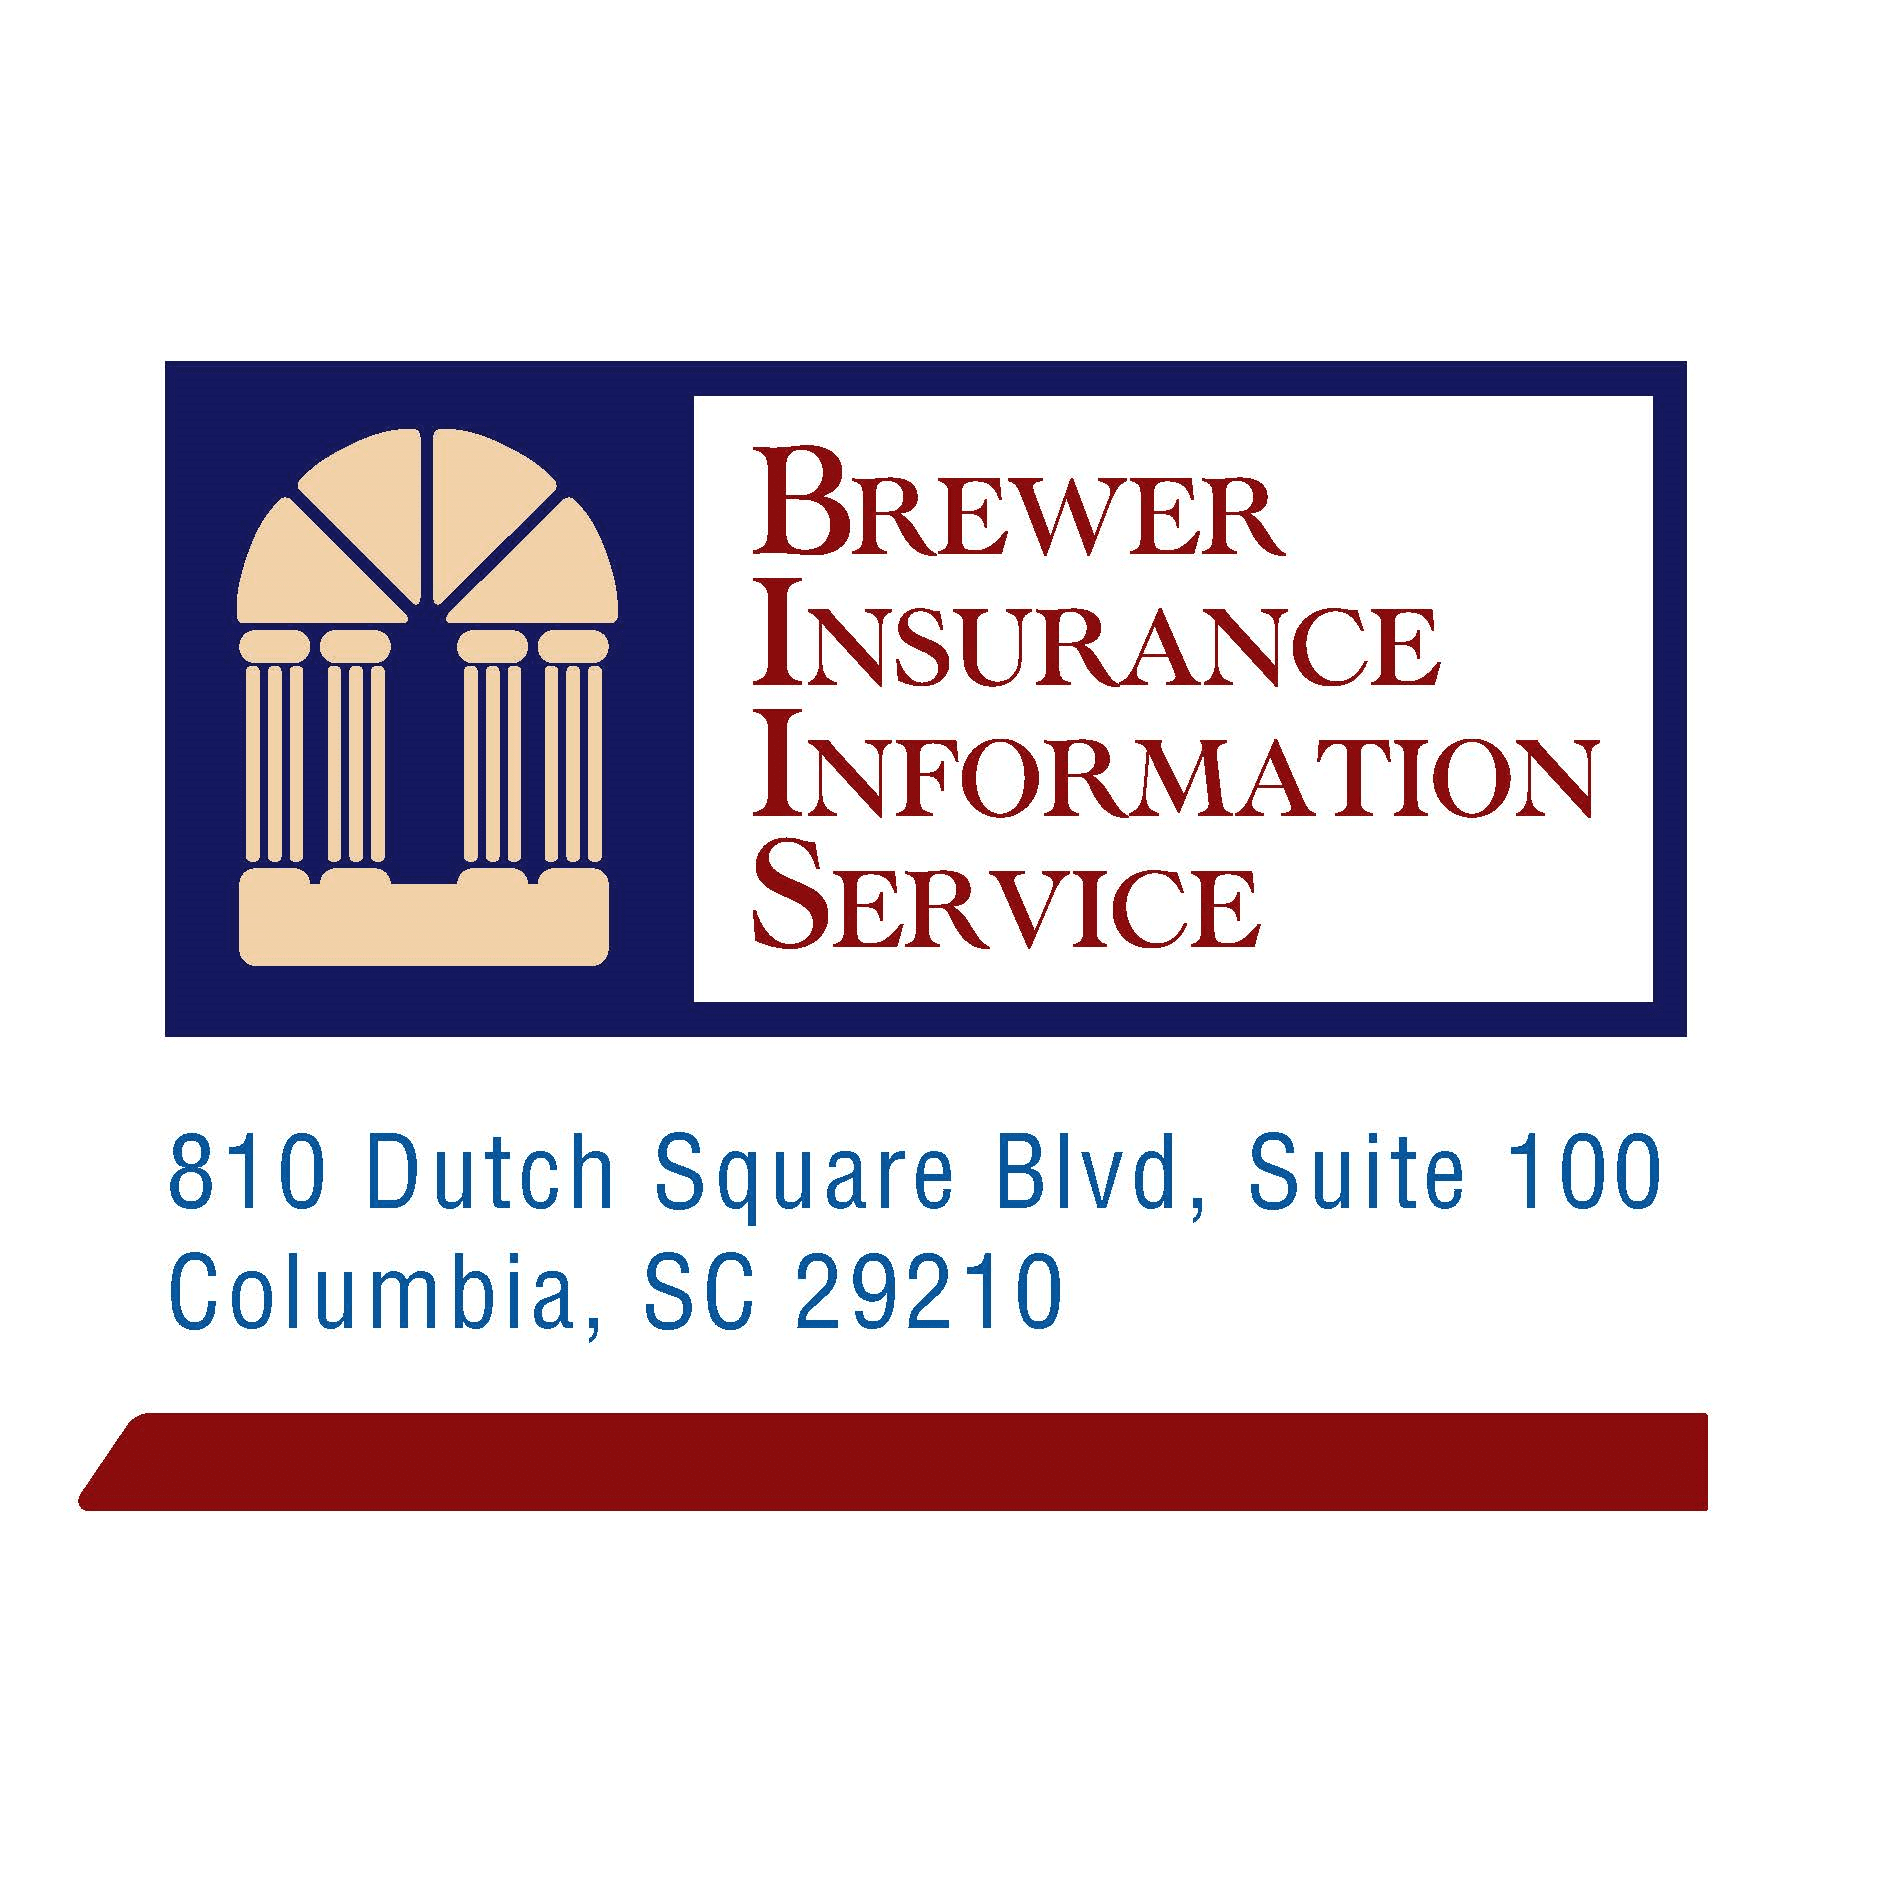 Brewer Insurance Information Service